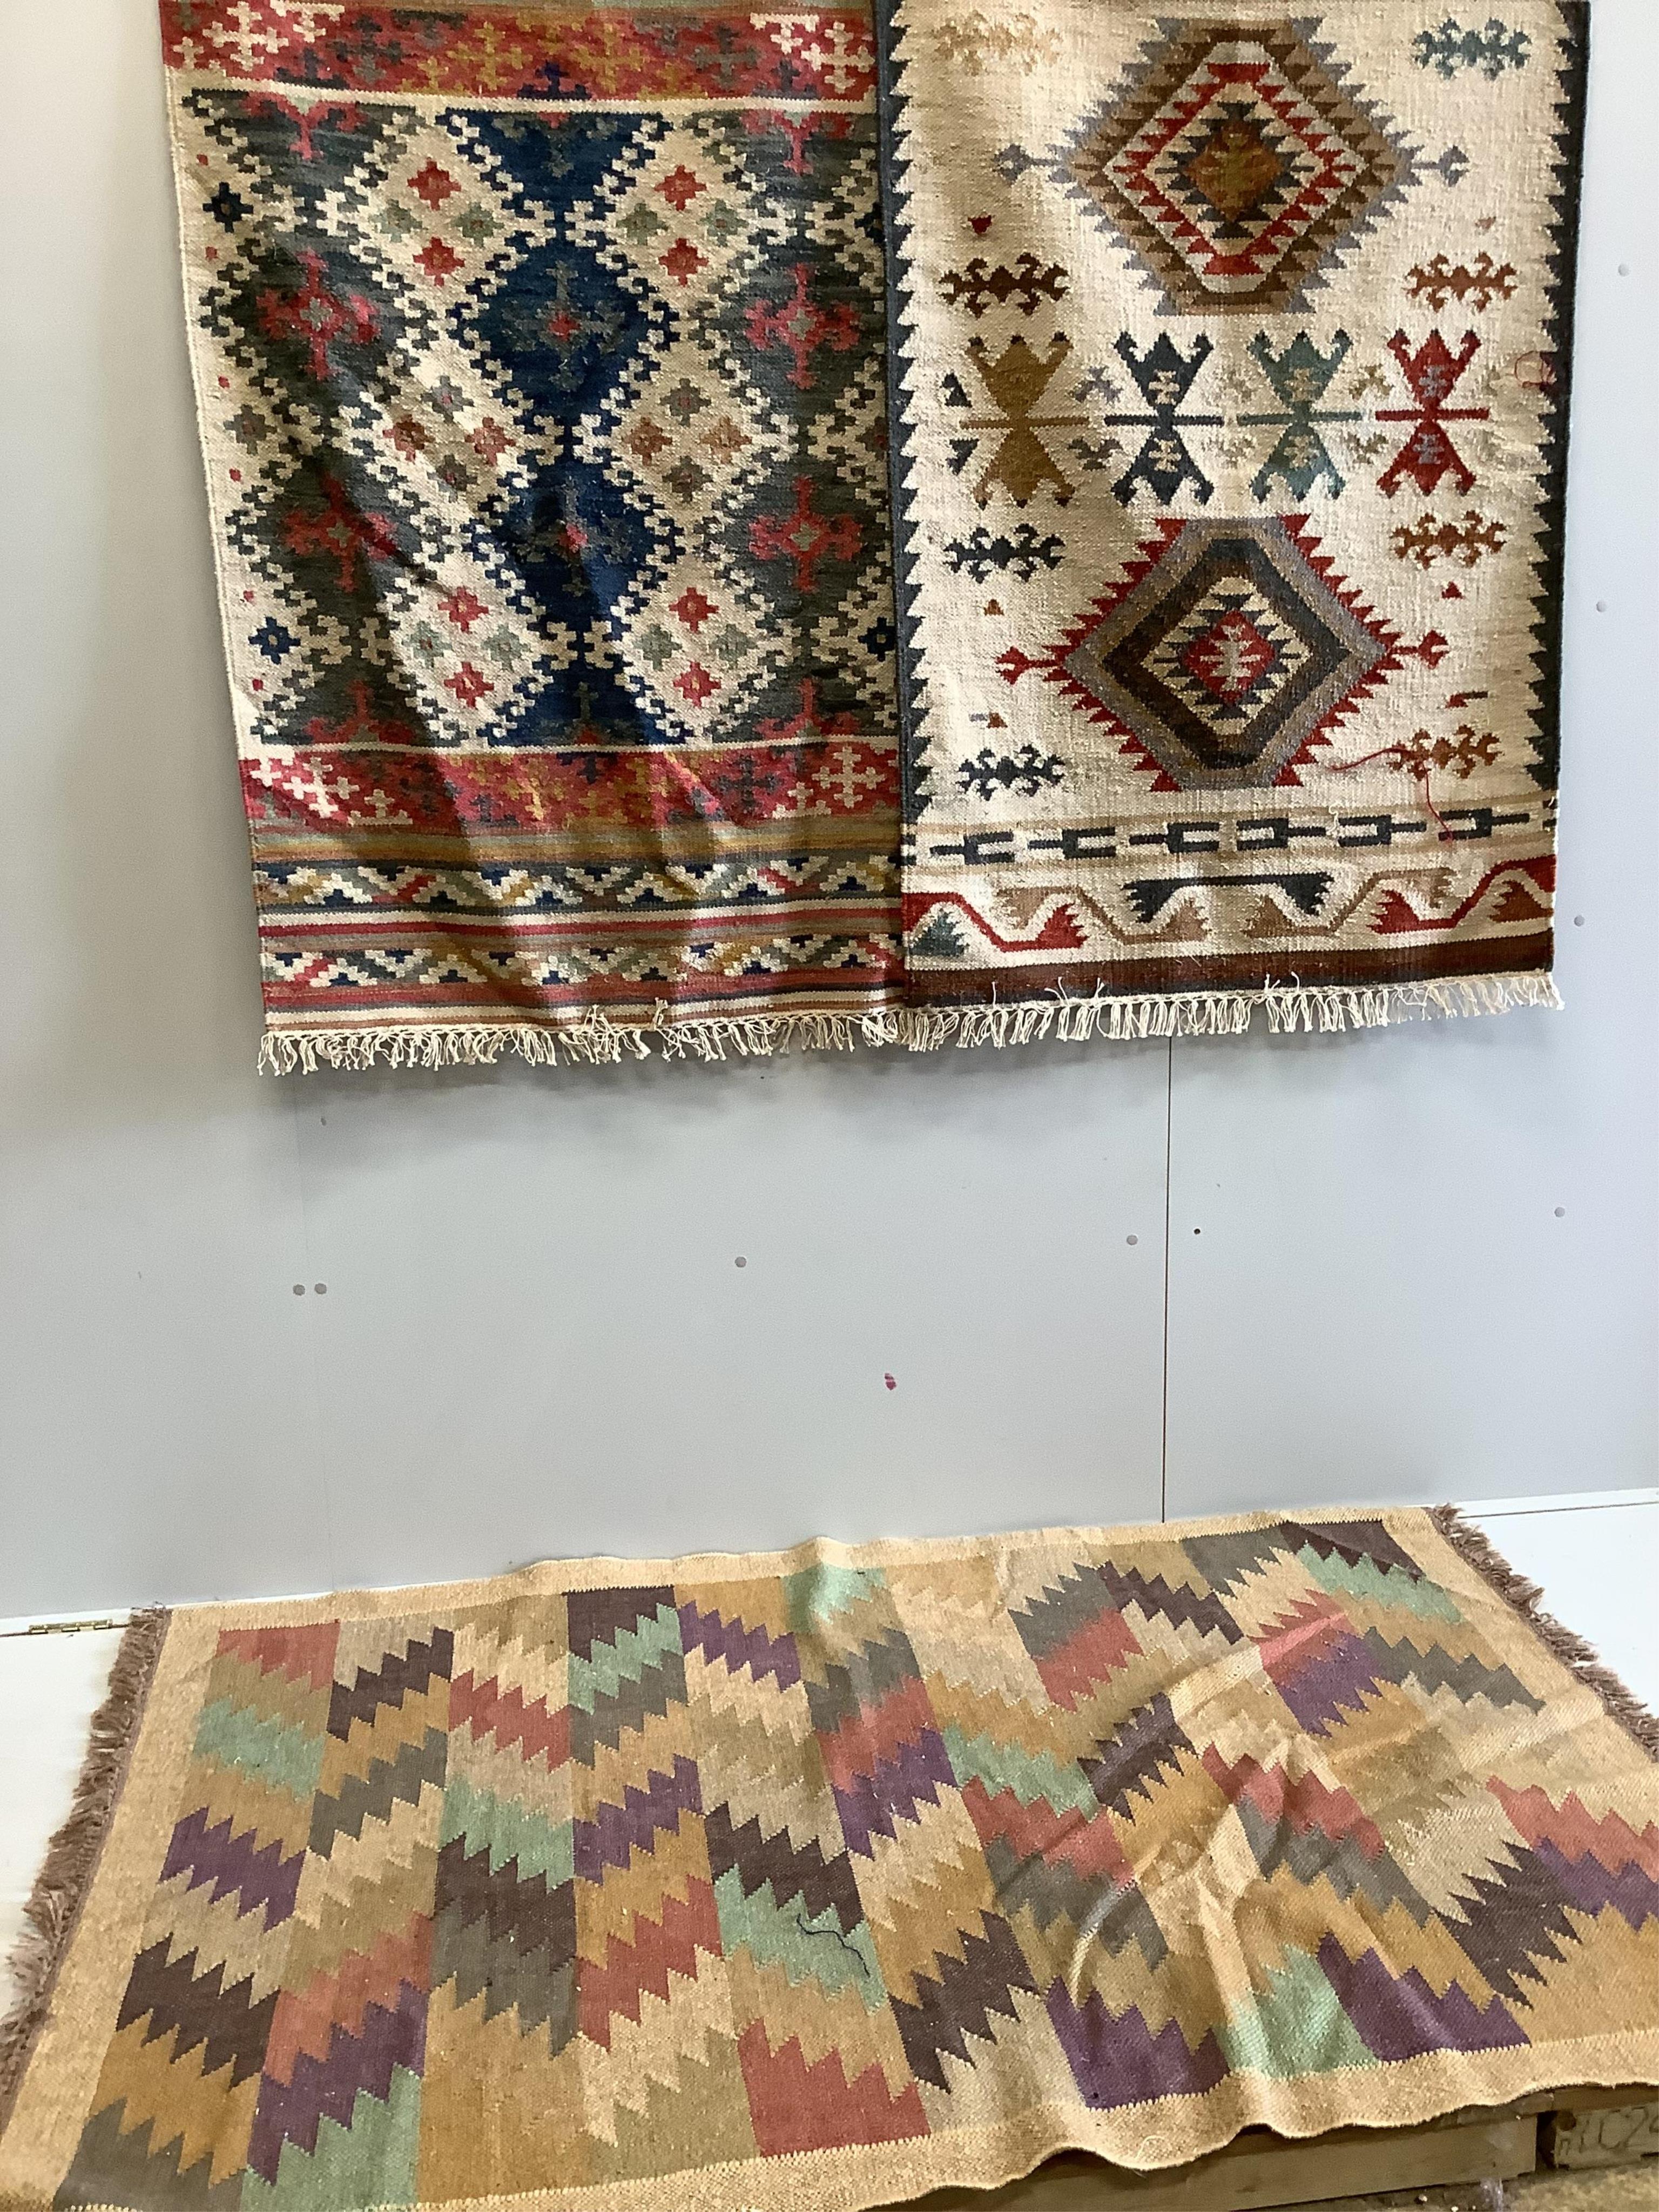 Three modern Indian Kilim rugs, largest 180 x 120cm. Condition - good